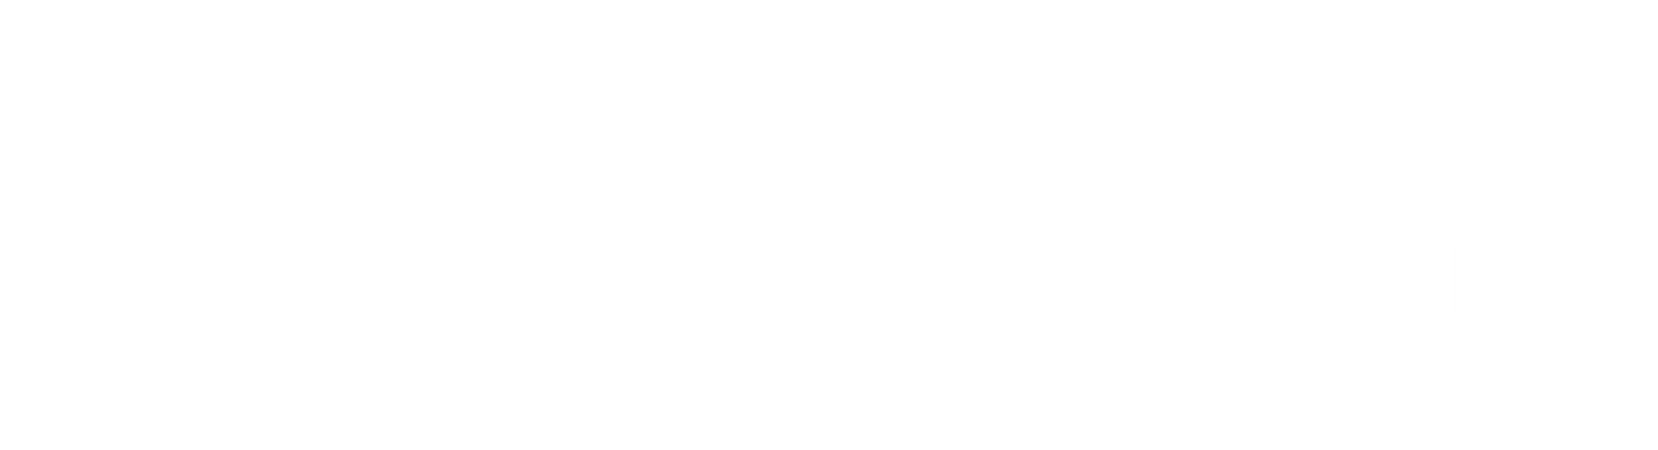 Harmony Hill Animal Hospital White Logo